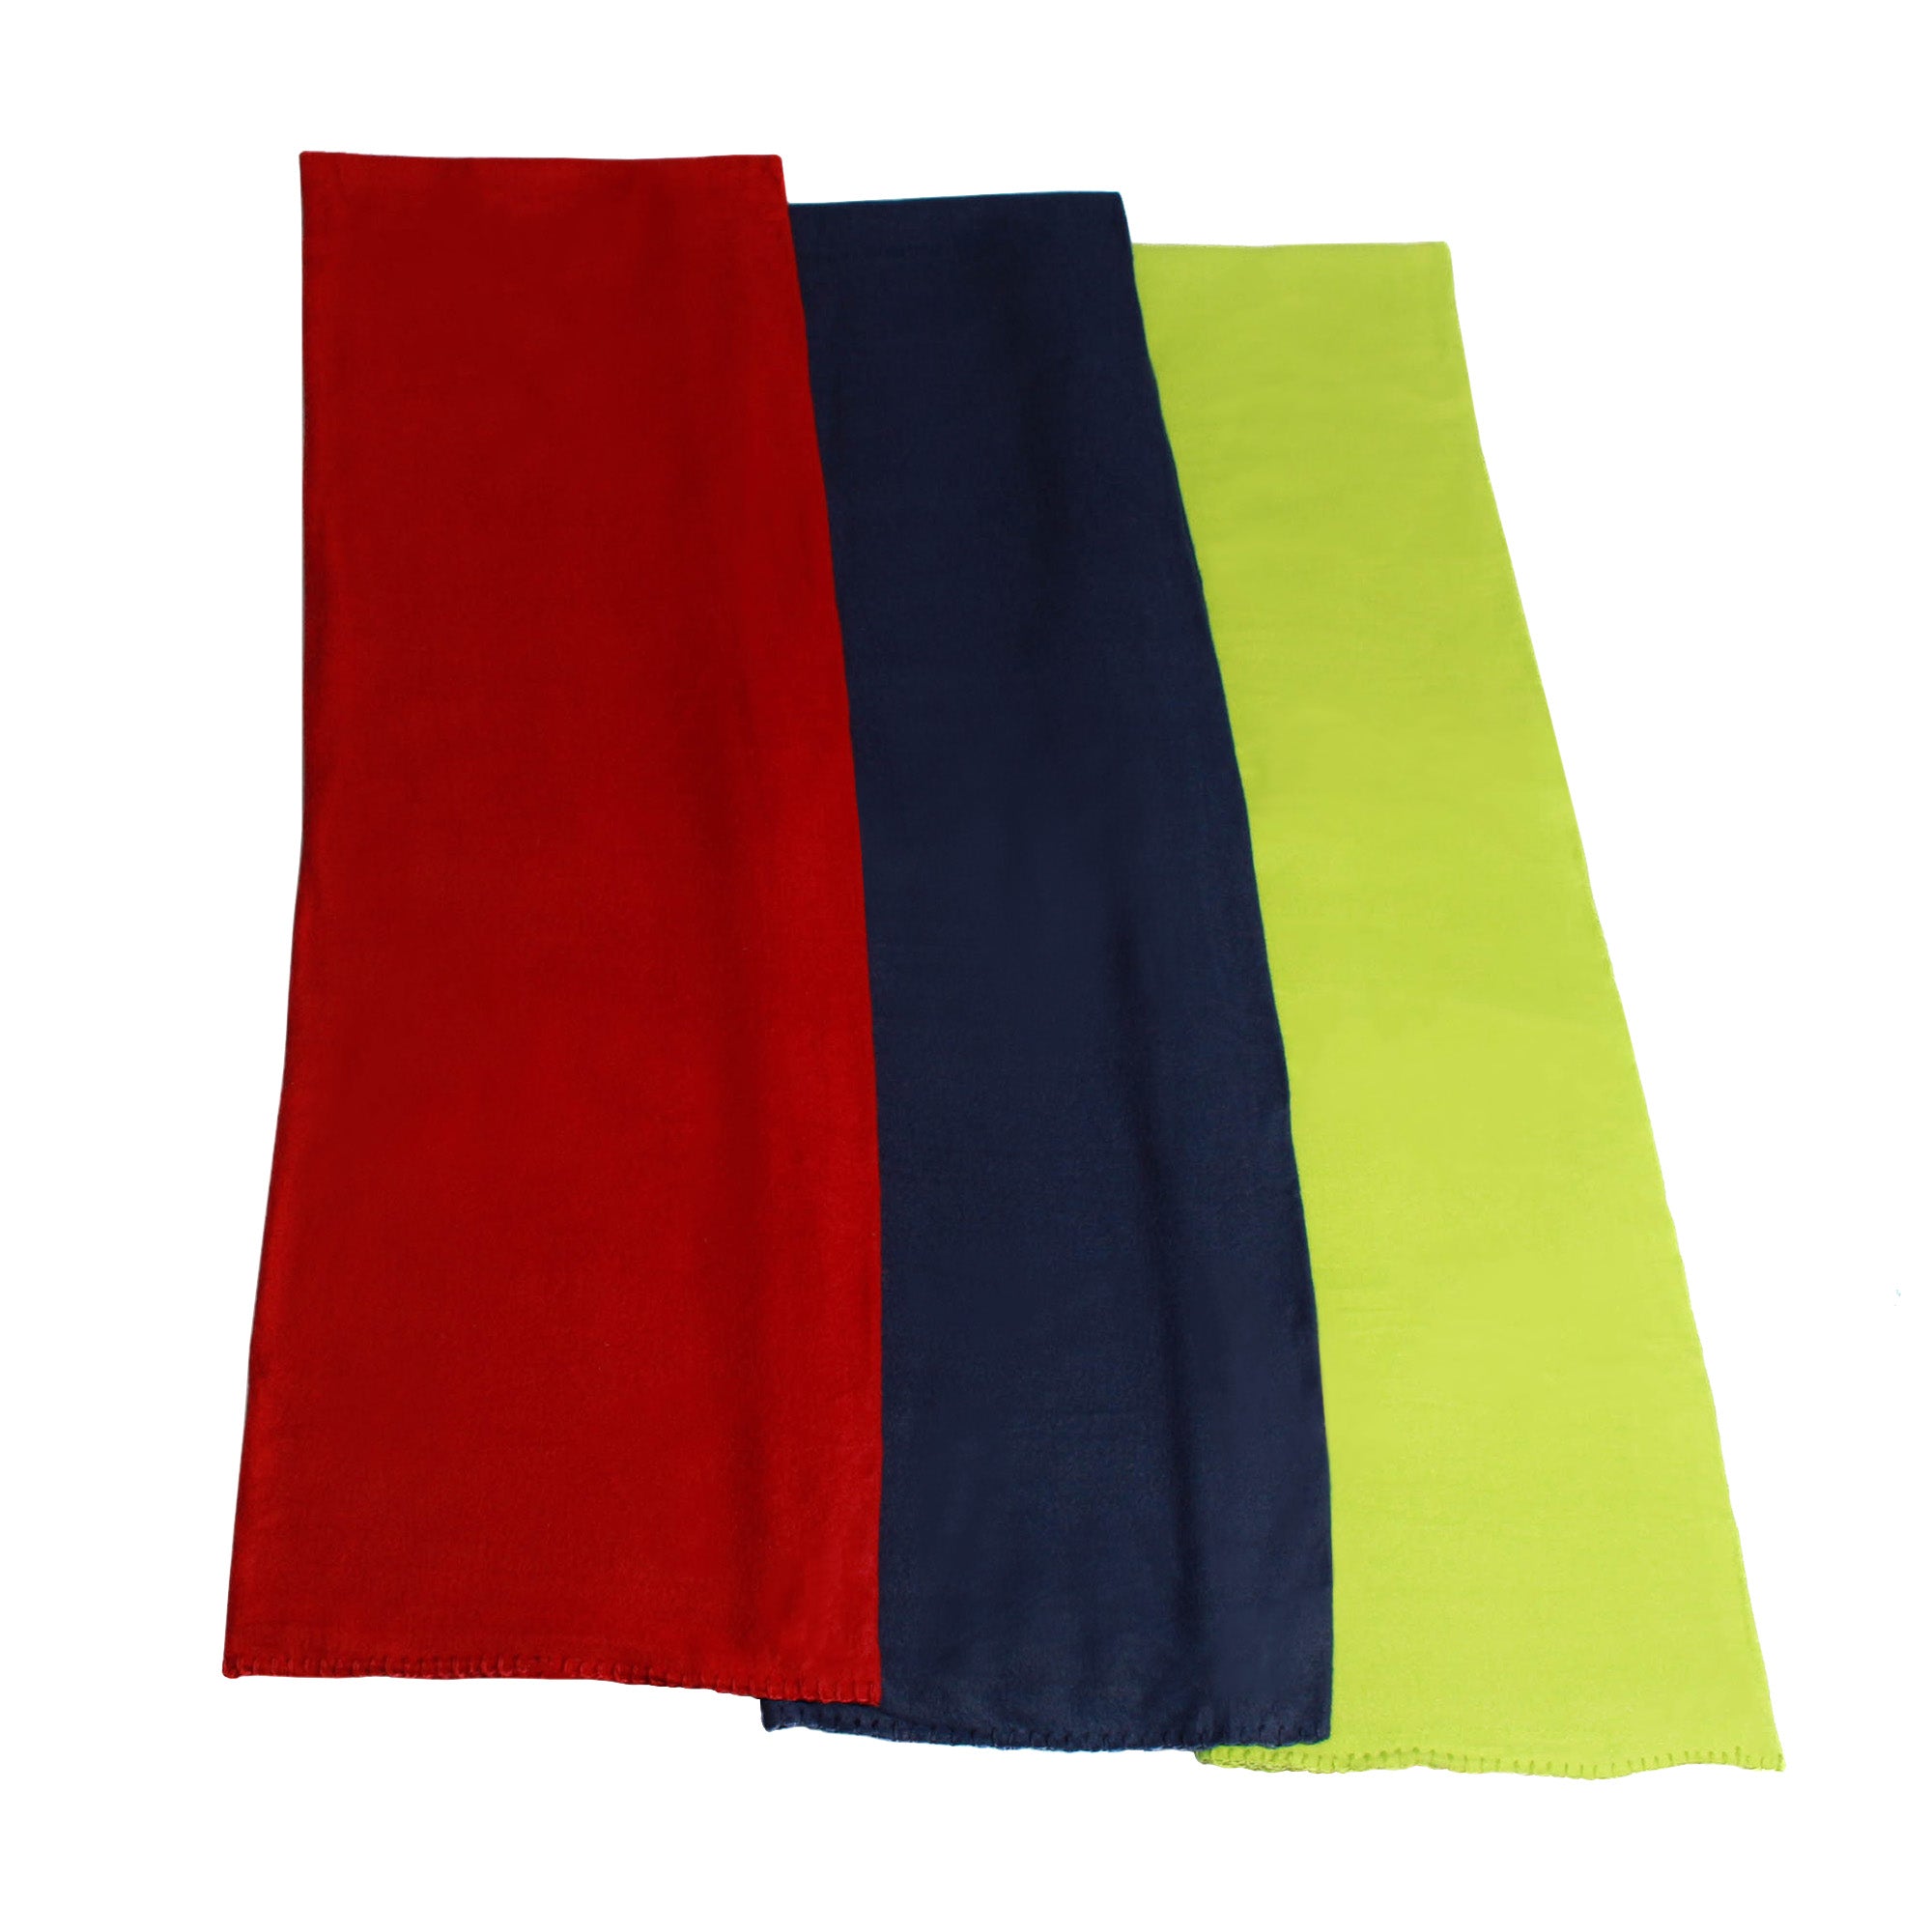 Lightweight Fleece Blankets - Bulk Winter Accessories Wholesale Case of 24 Blankets